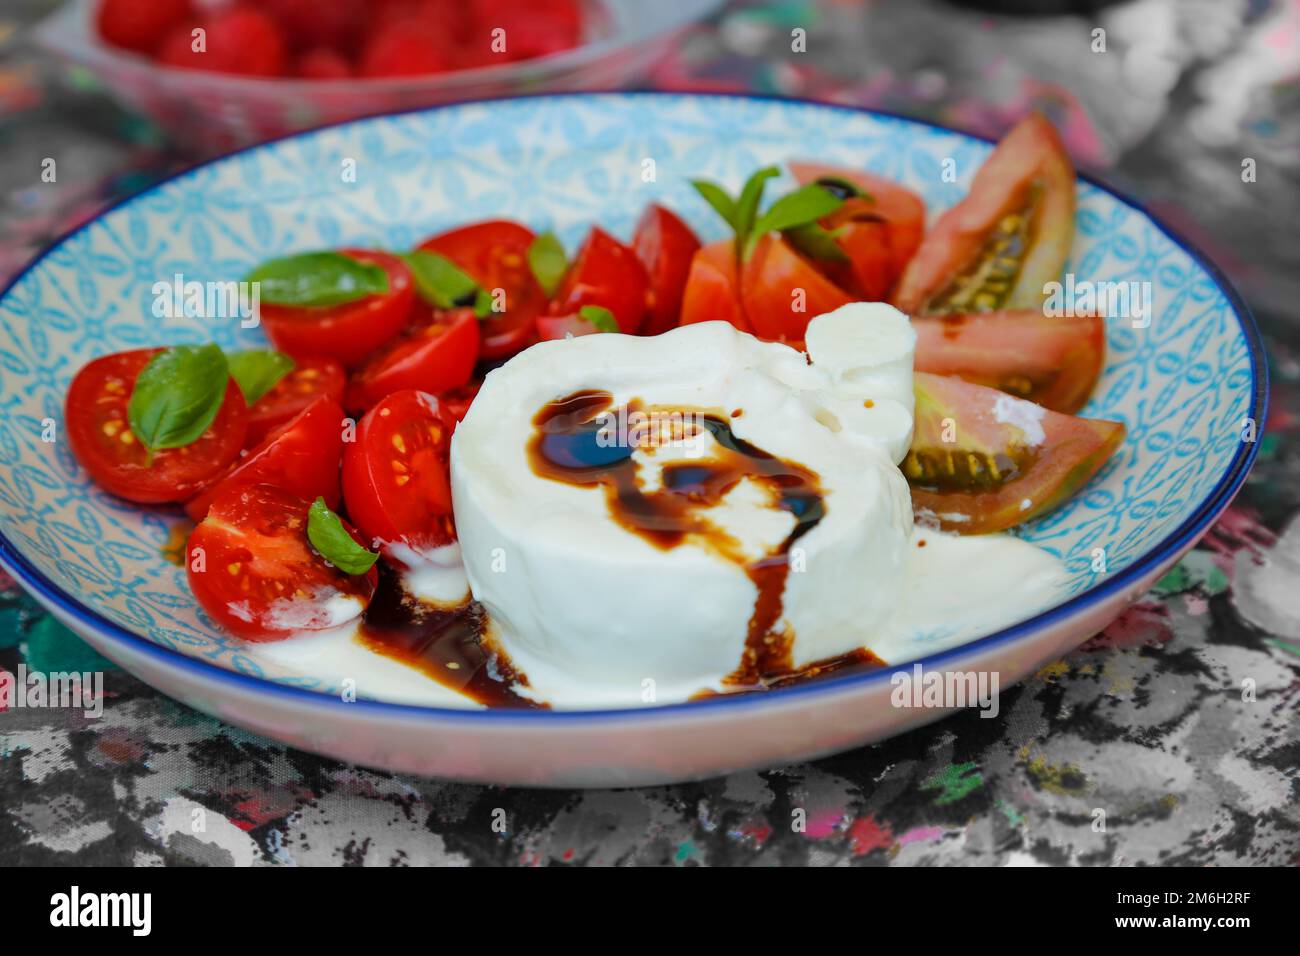 Tomatoes with basil and buffalo mozzarella, balsamic vinegar, healthy, vegetables, salad, caprese, vegetarian, plate, food photography, Germany Stock Photo